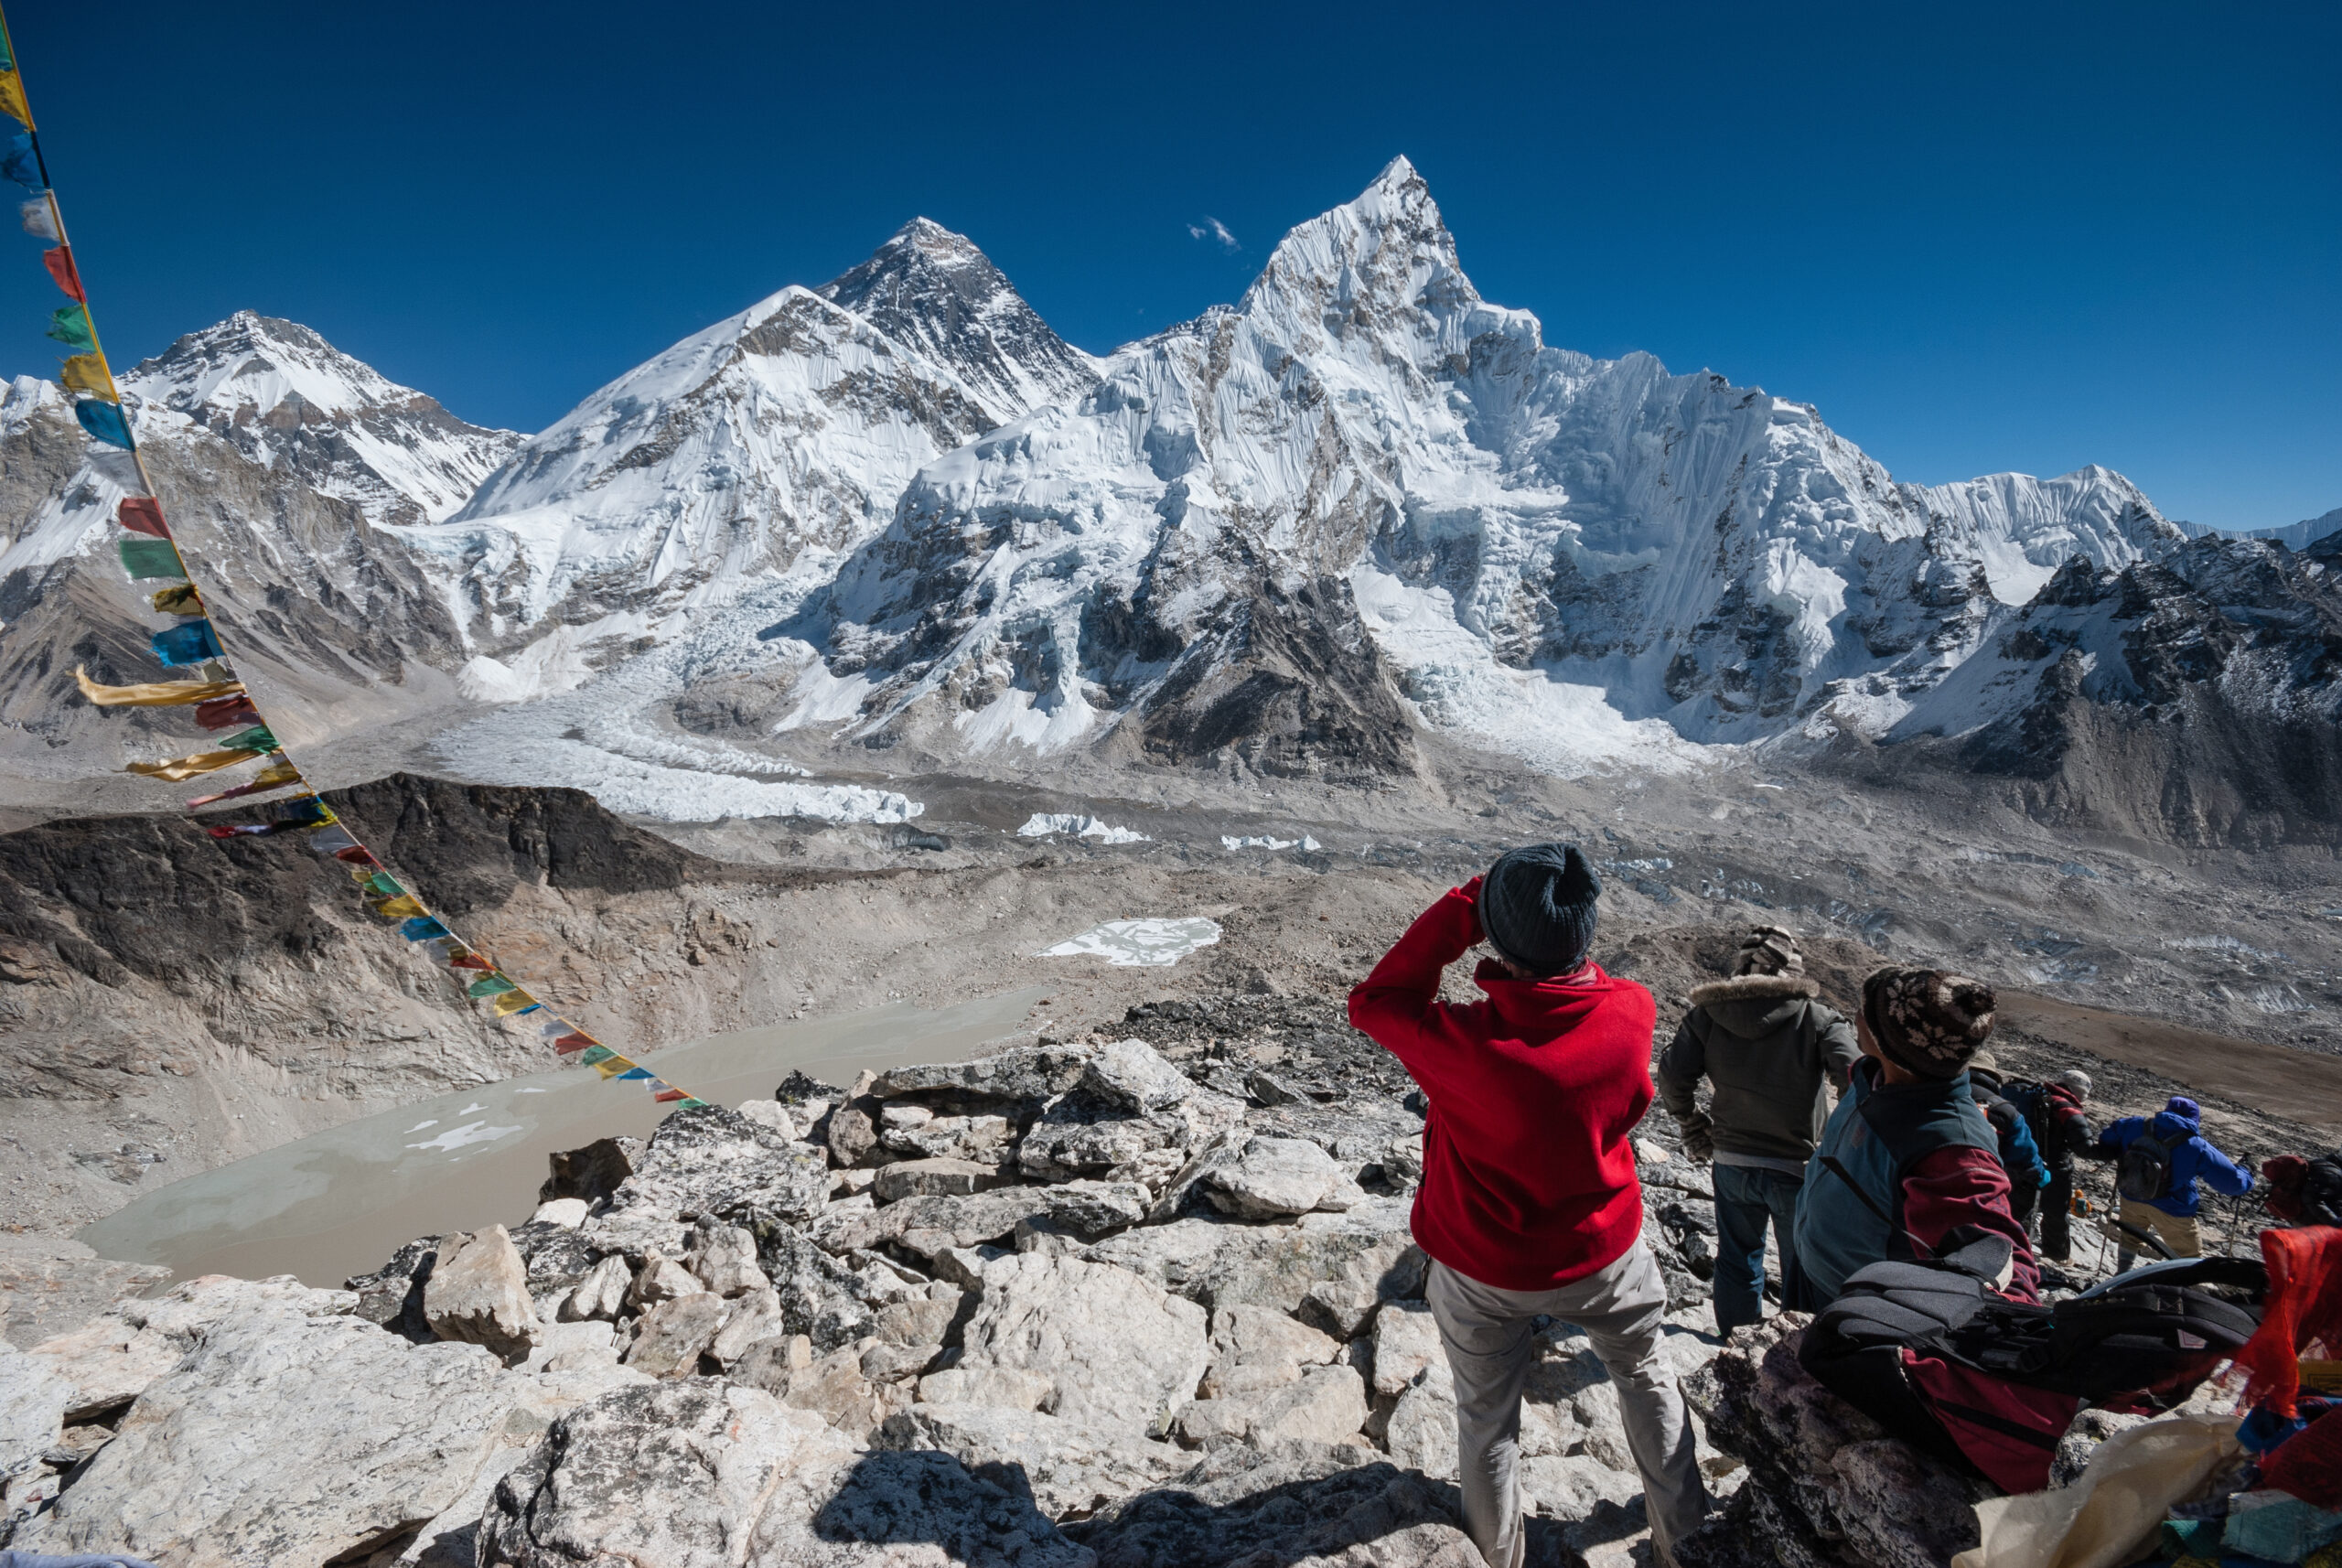 Kala Patthar view of Everest and Lhotse